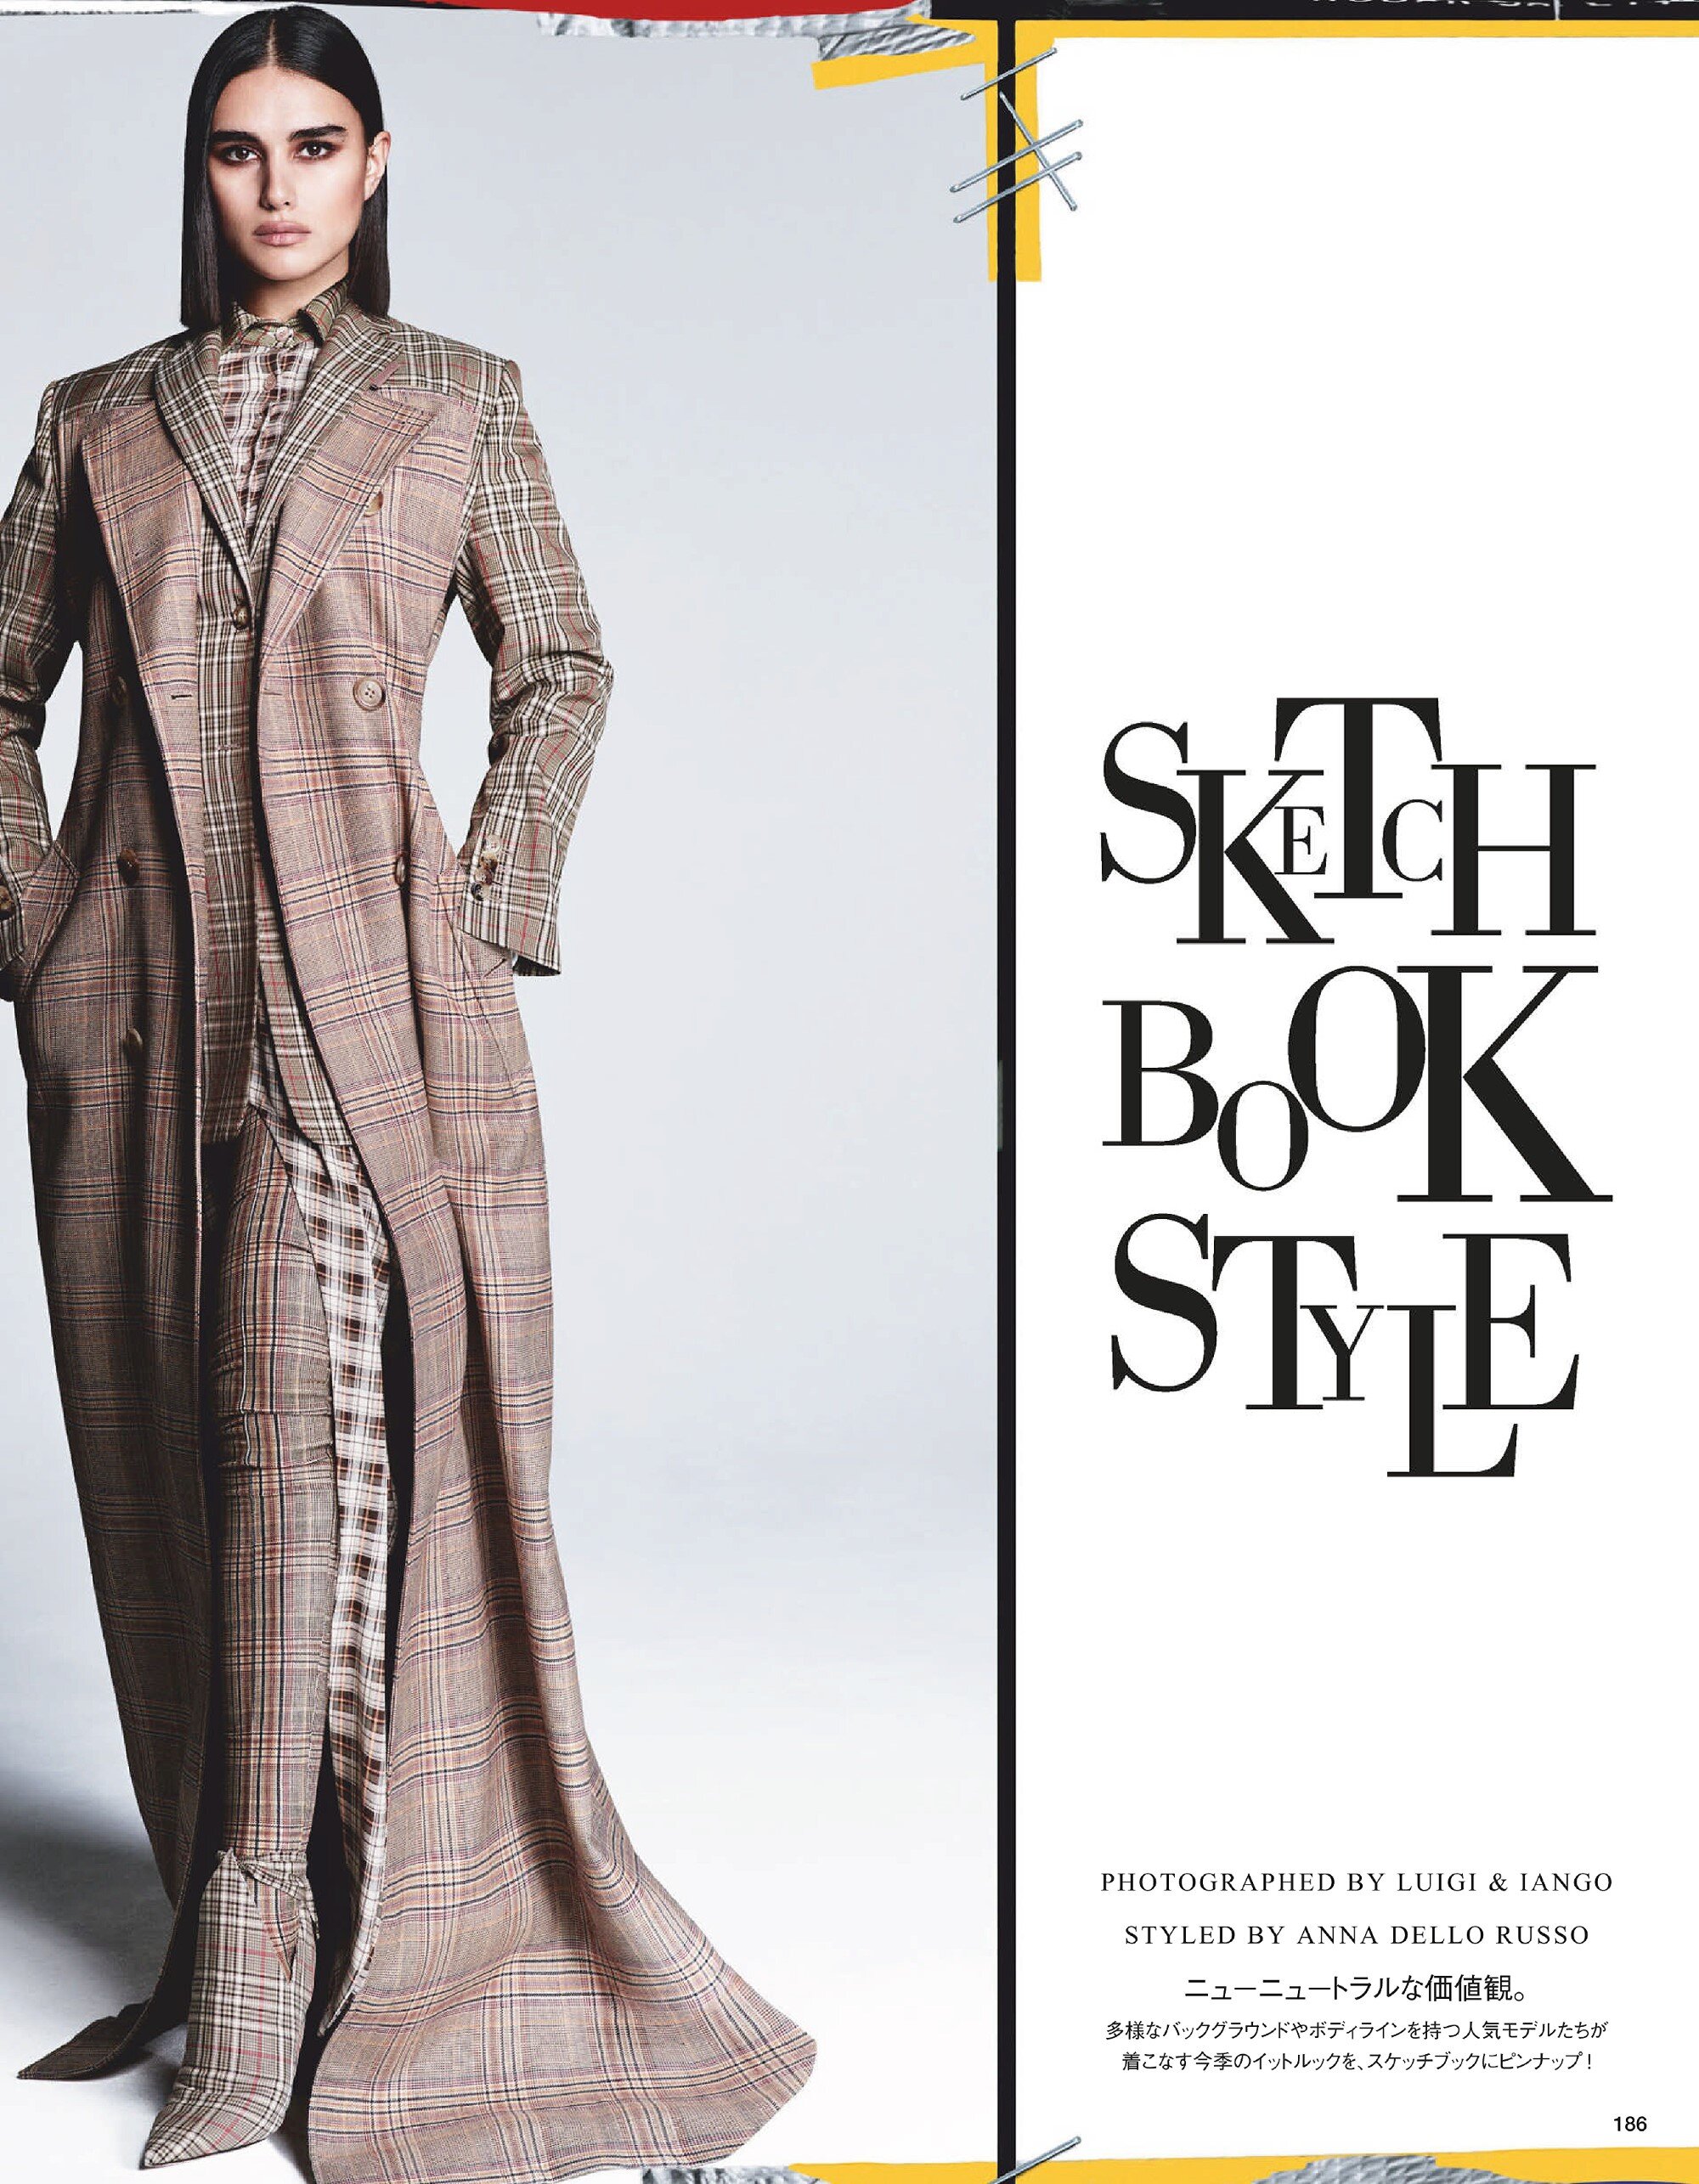 Luigi Iango 'Sketch Book Style' in Vogue Japan Oct 2020 (1).jpg